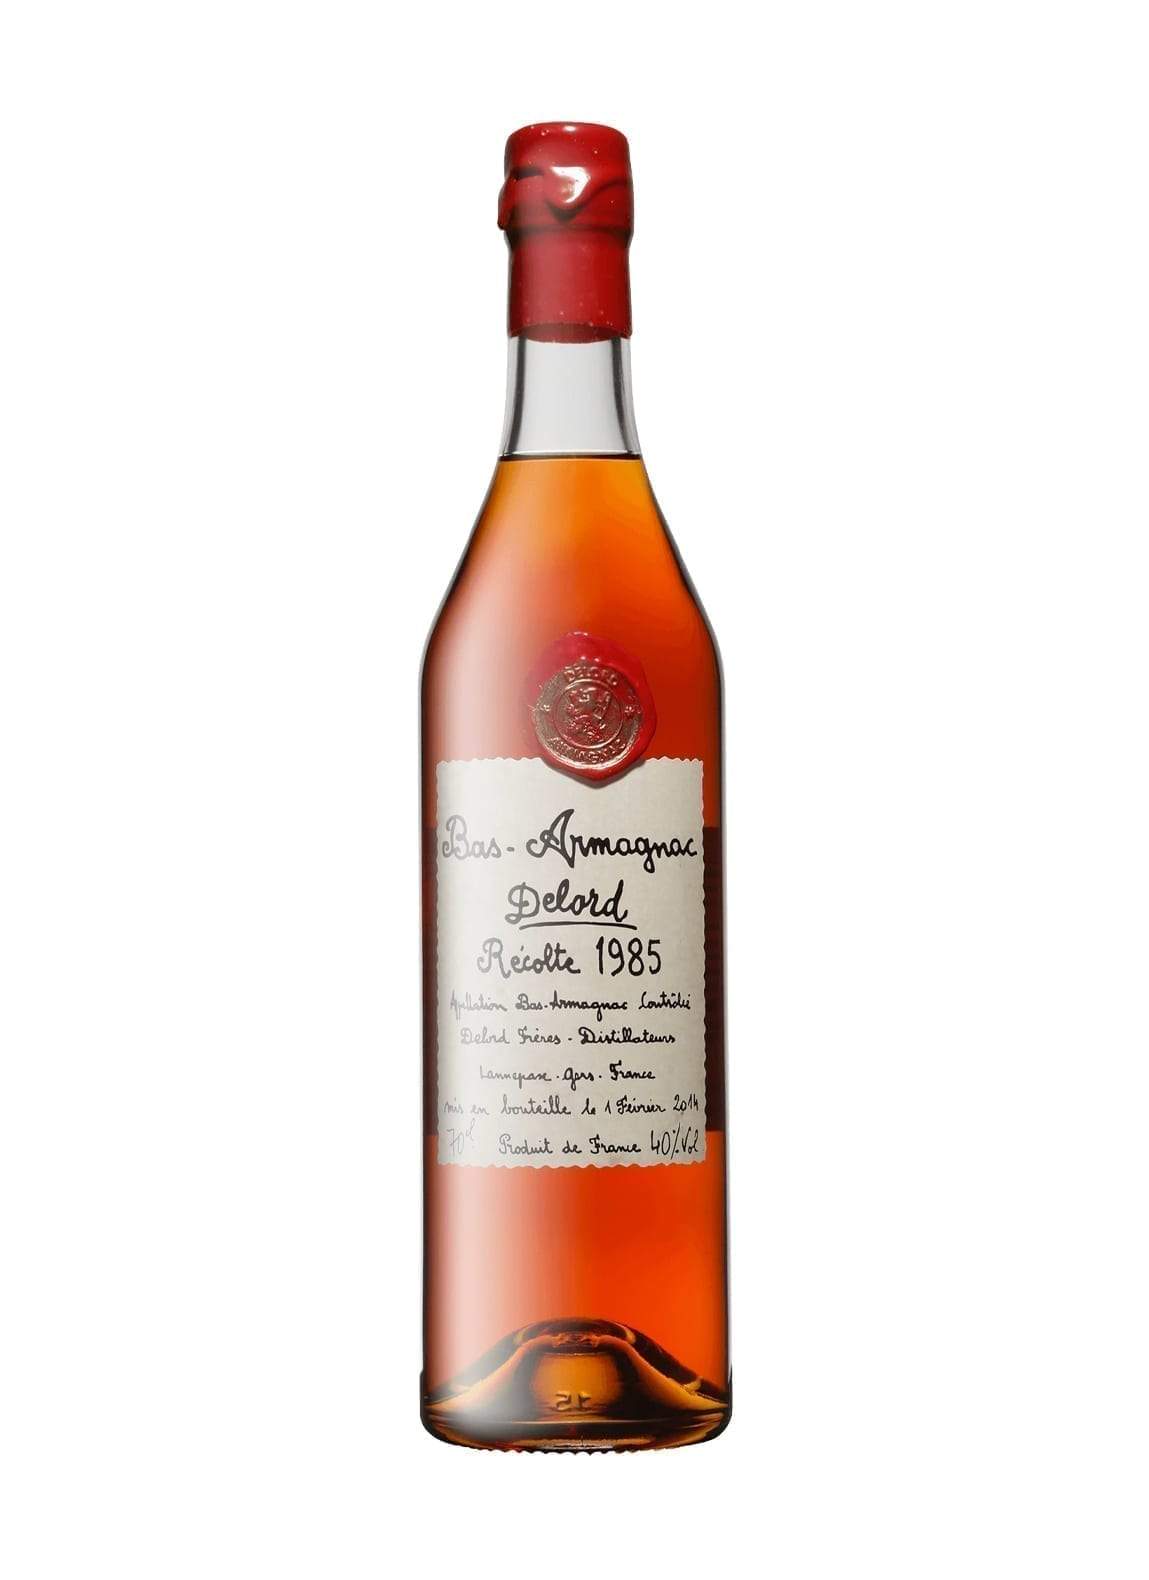 Delord 1985 Bas Armagnac 40% 700ml | Brandy | Shop online at Spirits of France